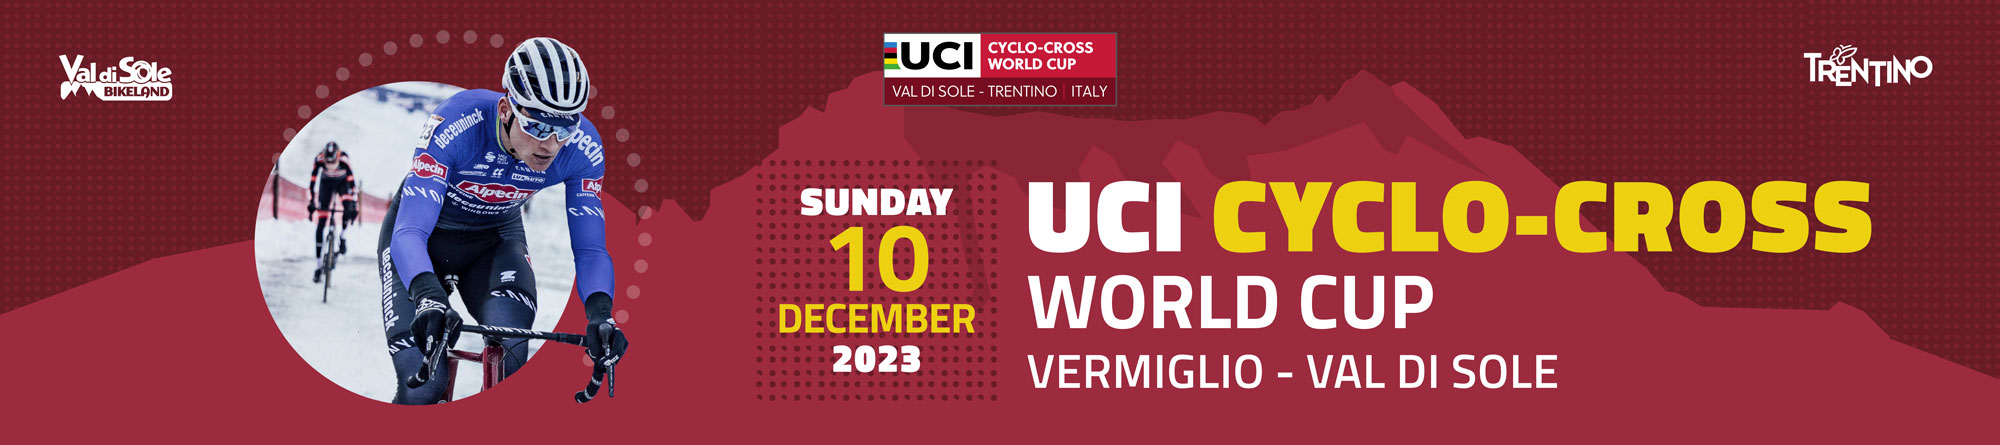 UCI Cyclo-Cross World Cup 2023